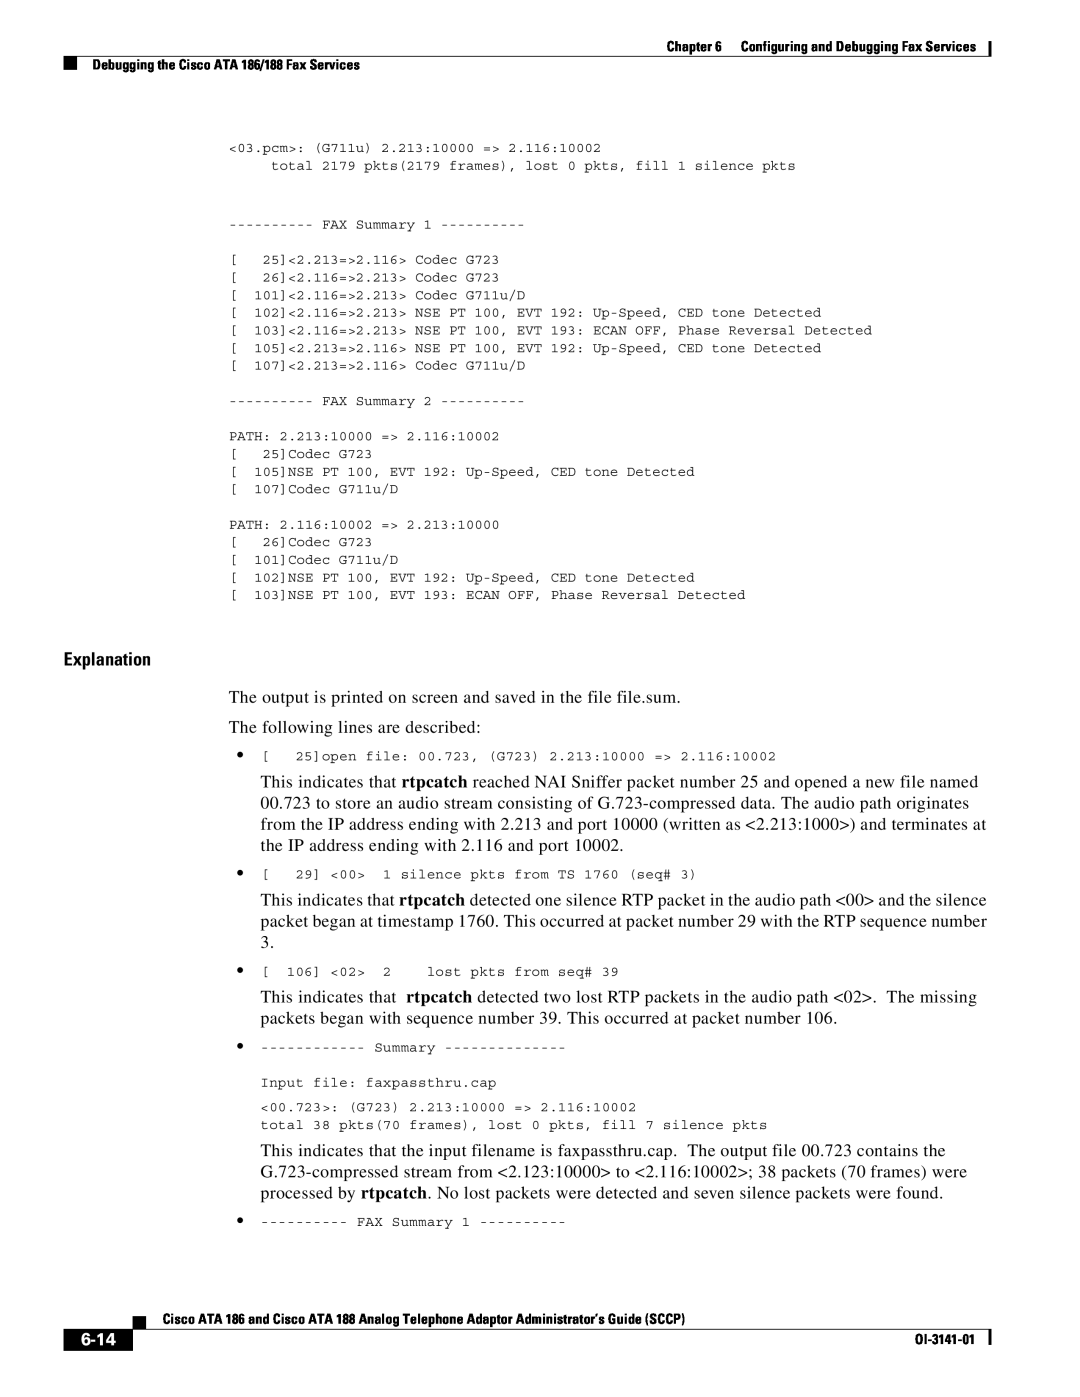 Cisco Systems ATA 186, ATA 188 manual Explanation, 6-14 